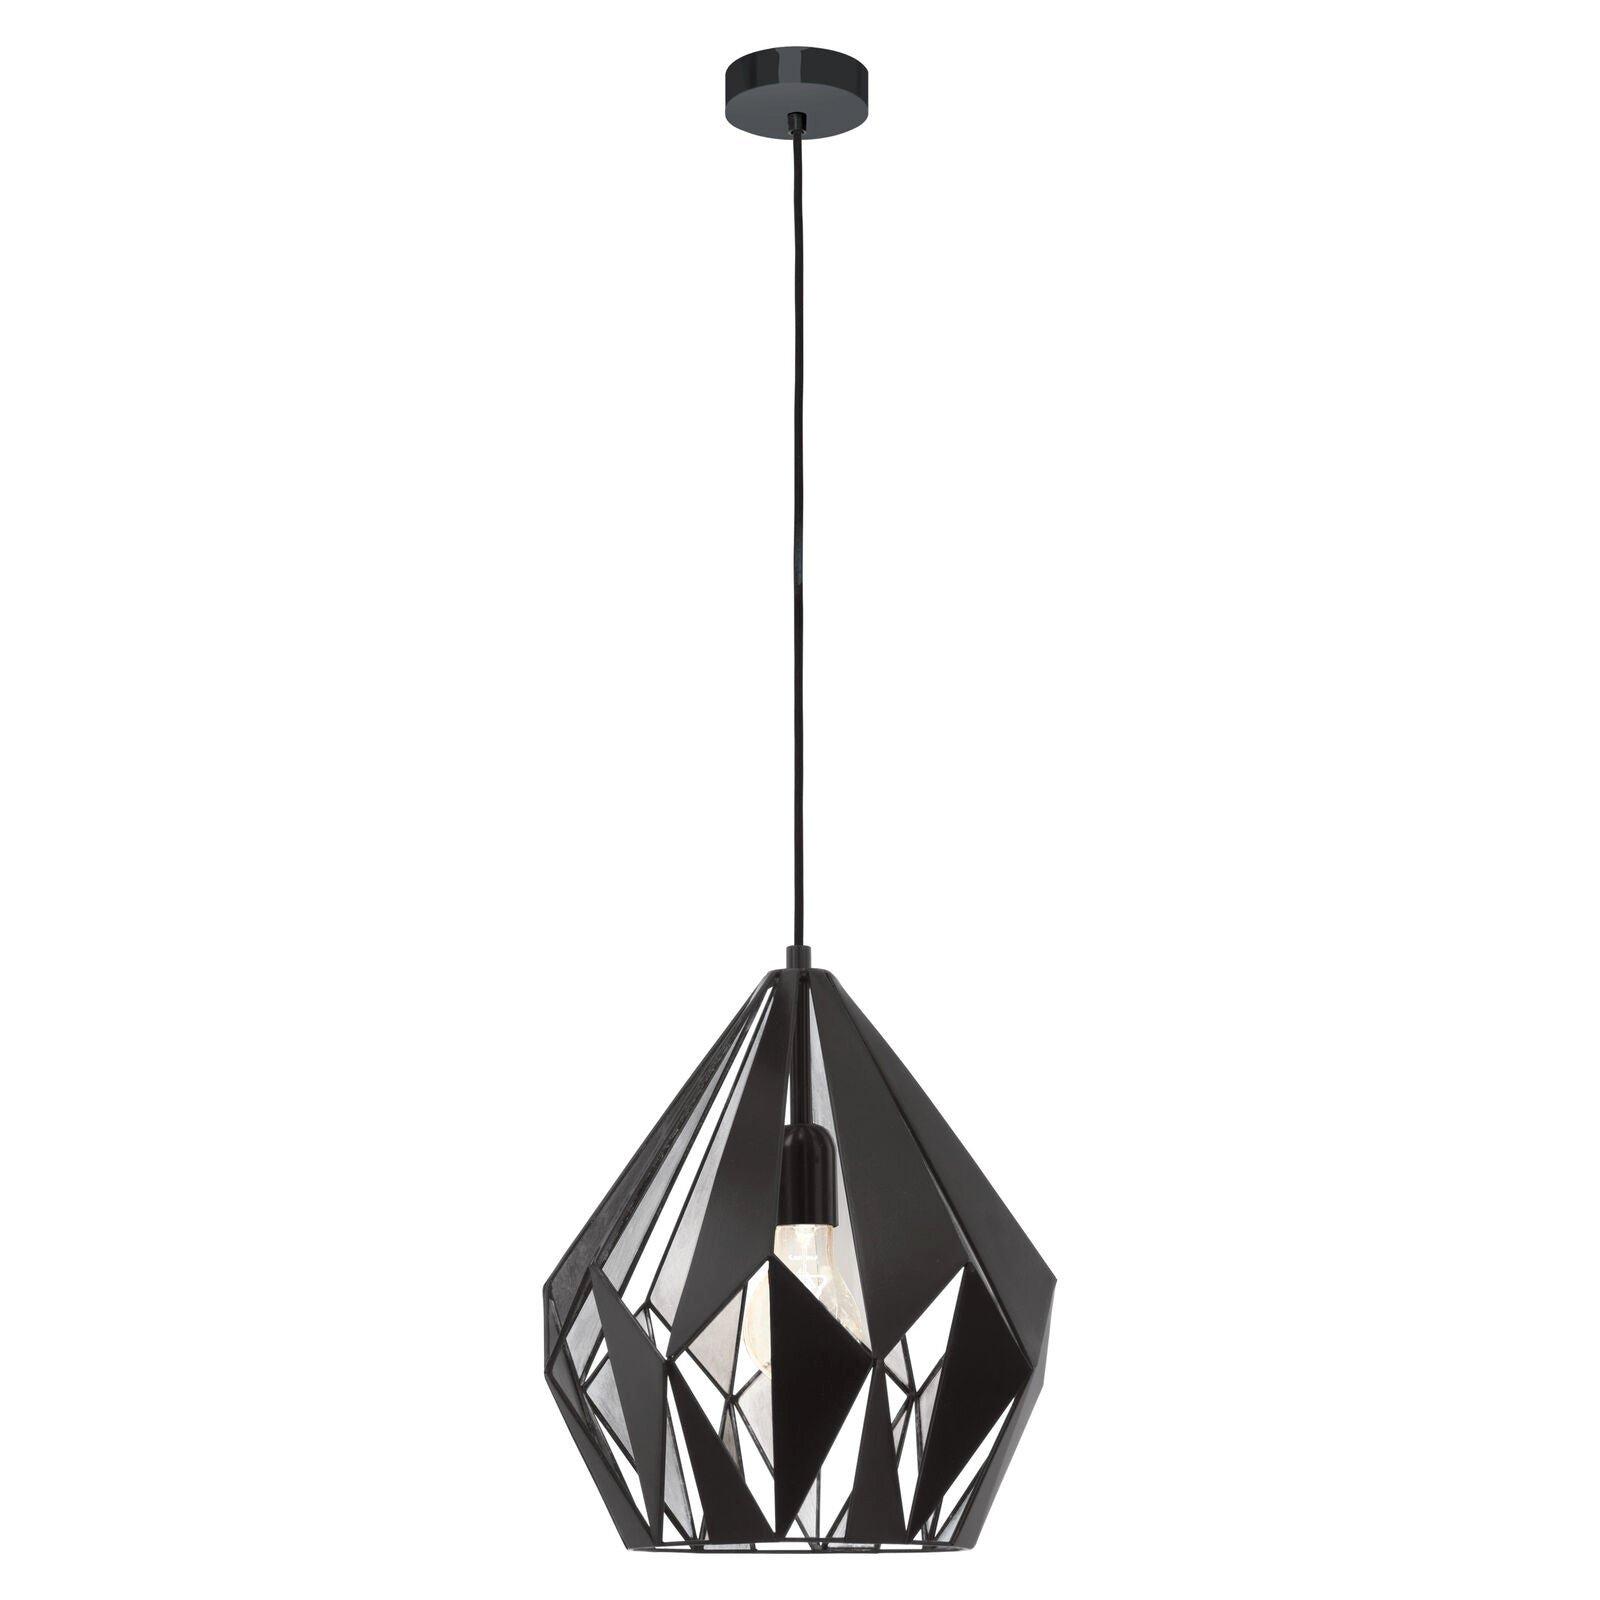 Hanging Ceiling Pendant Light Black & Silver Geometric 1x 60W E27 Feature Lamp